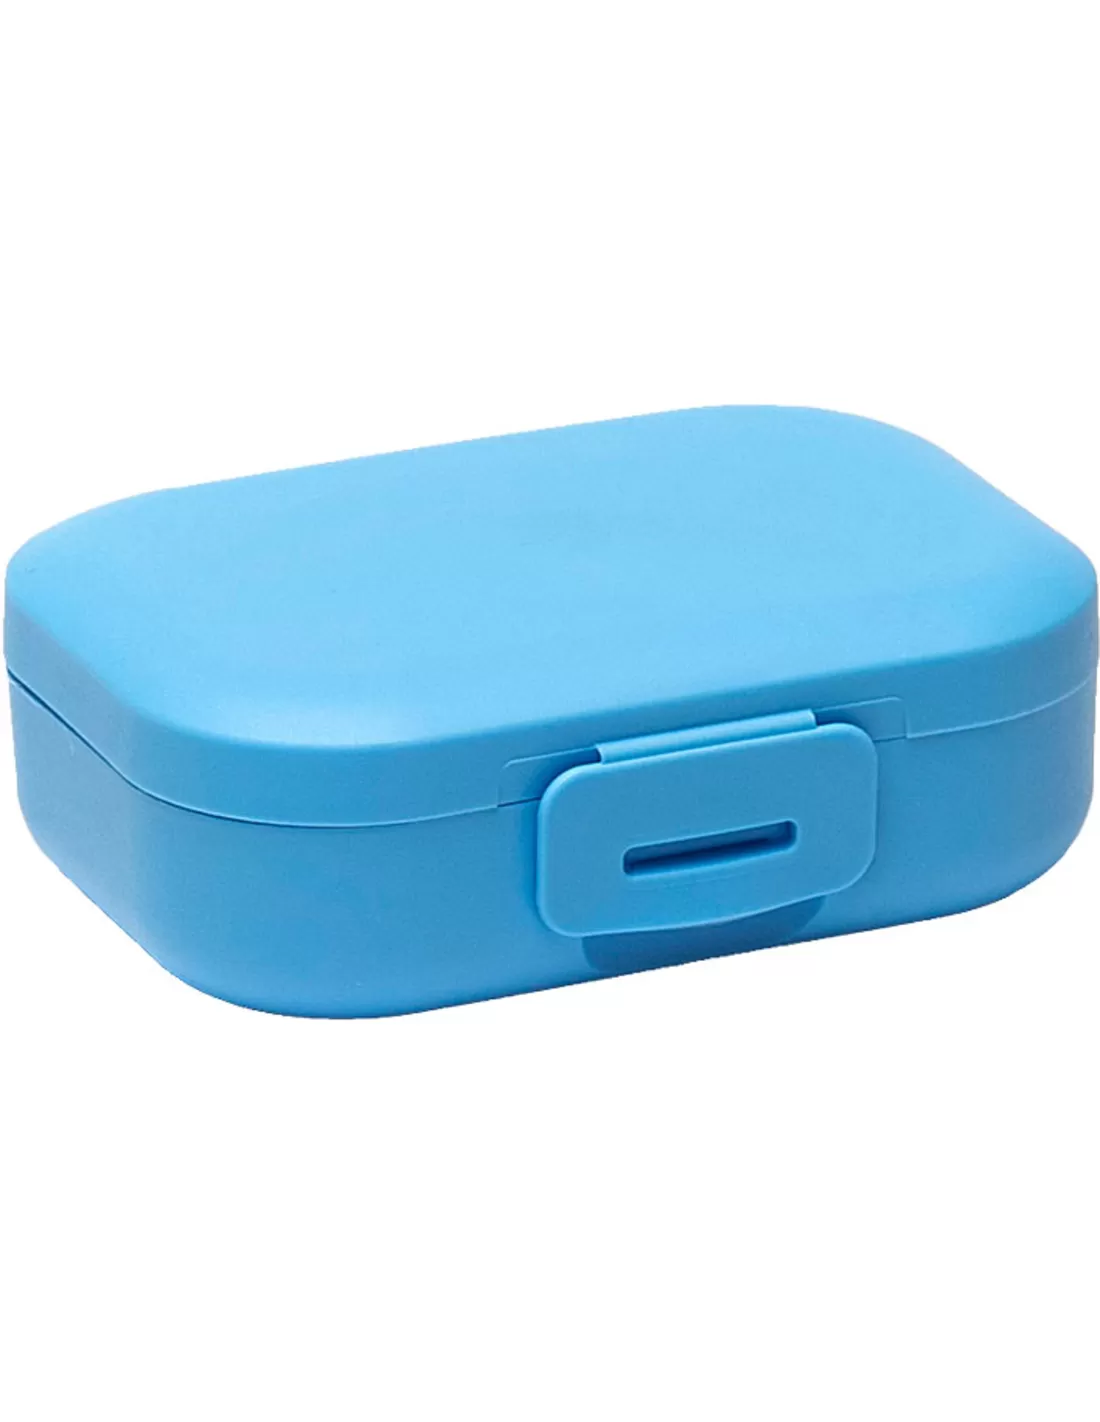 Snackbox - Blauw - 300 ml - 11 x 8 x 3.5 cm 